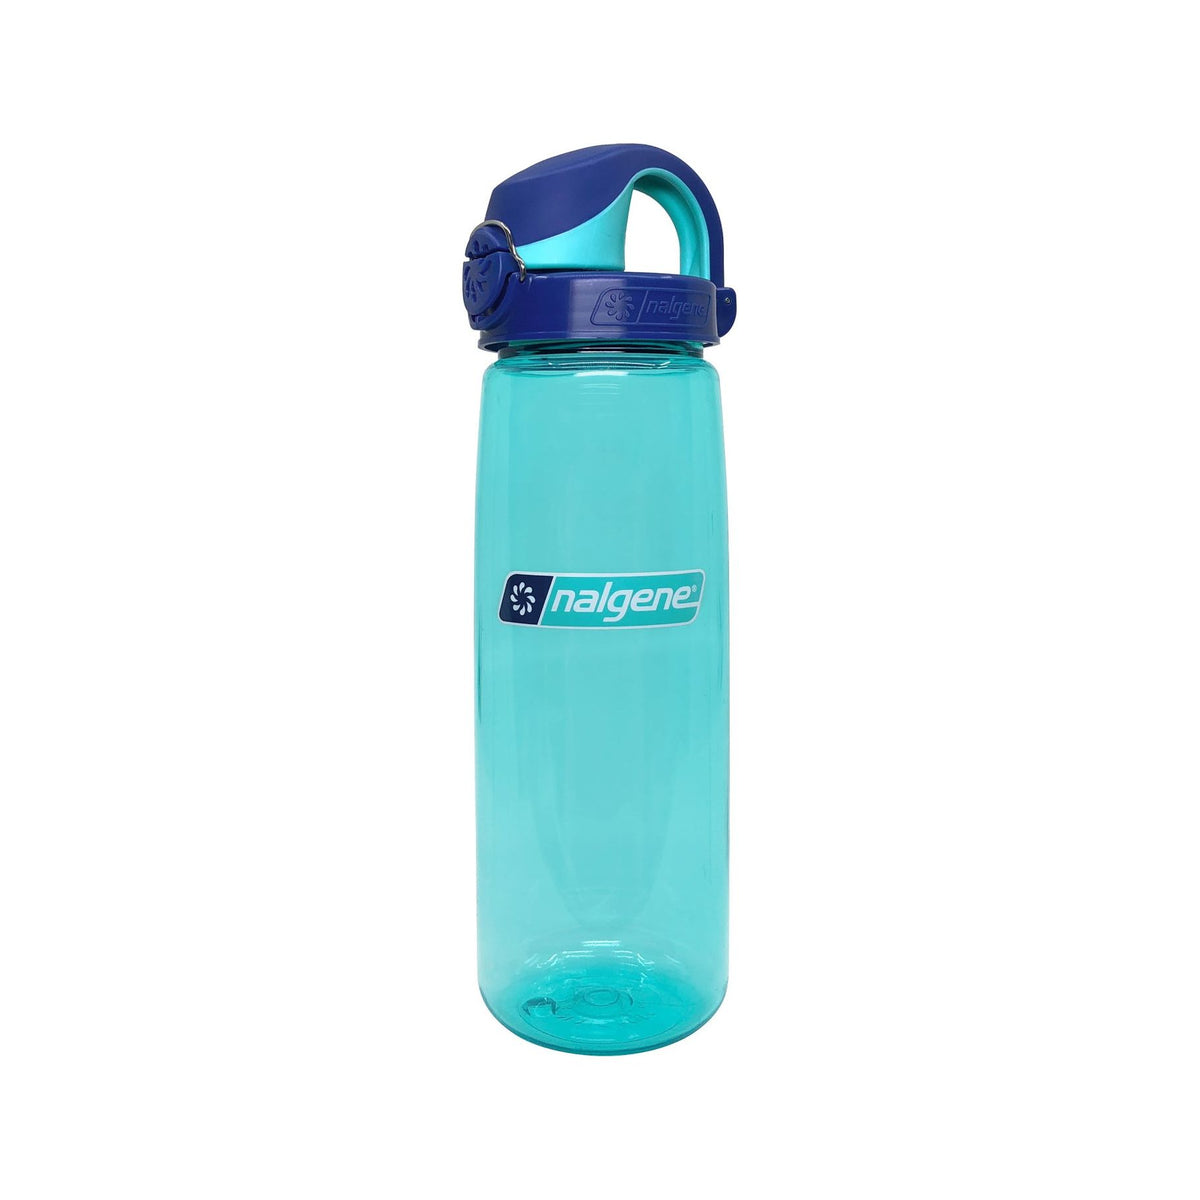 Nalgene 700ml Sustain OTF Water Bottle - Blue Aqua, Blue Cap